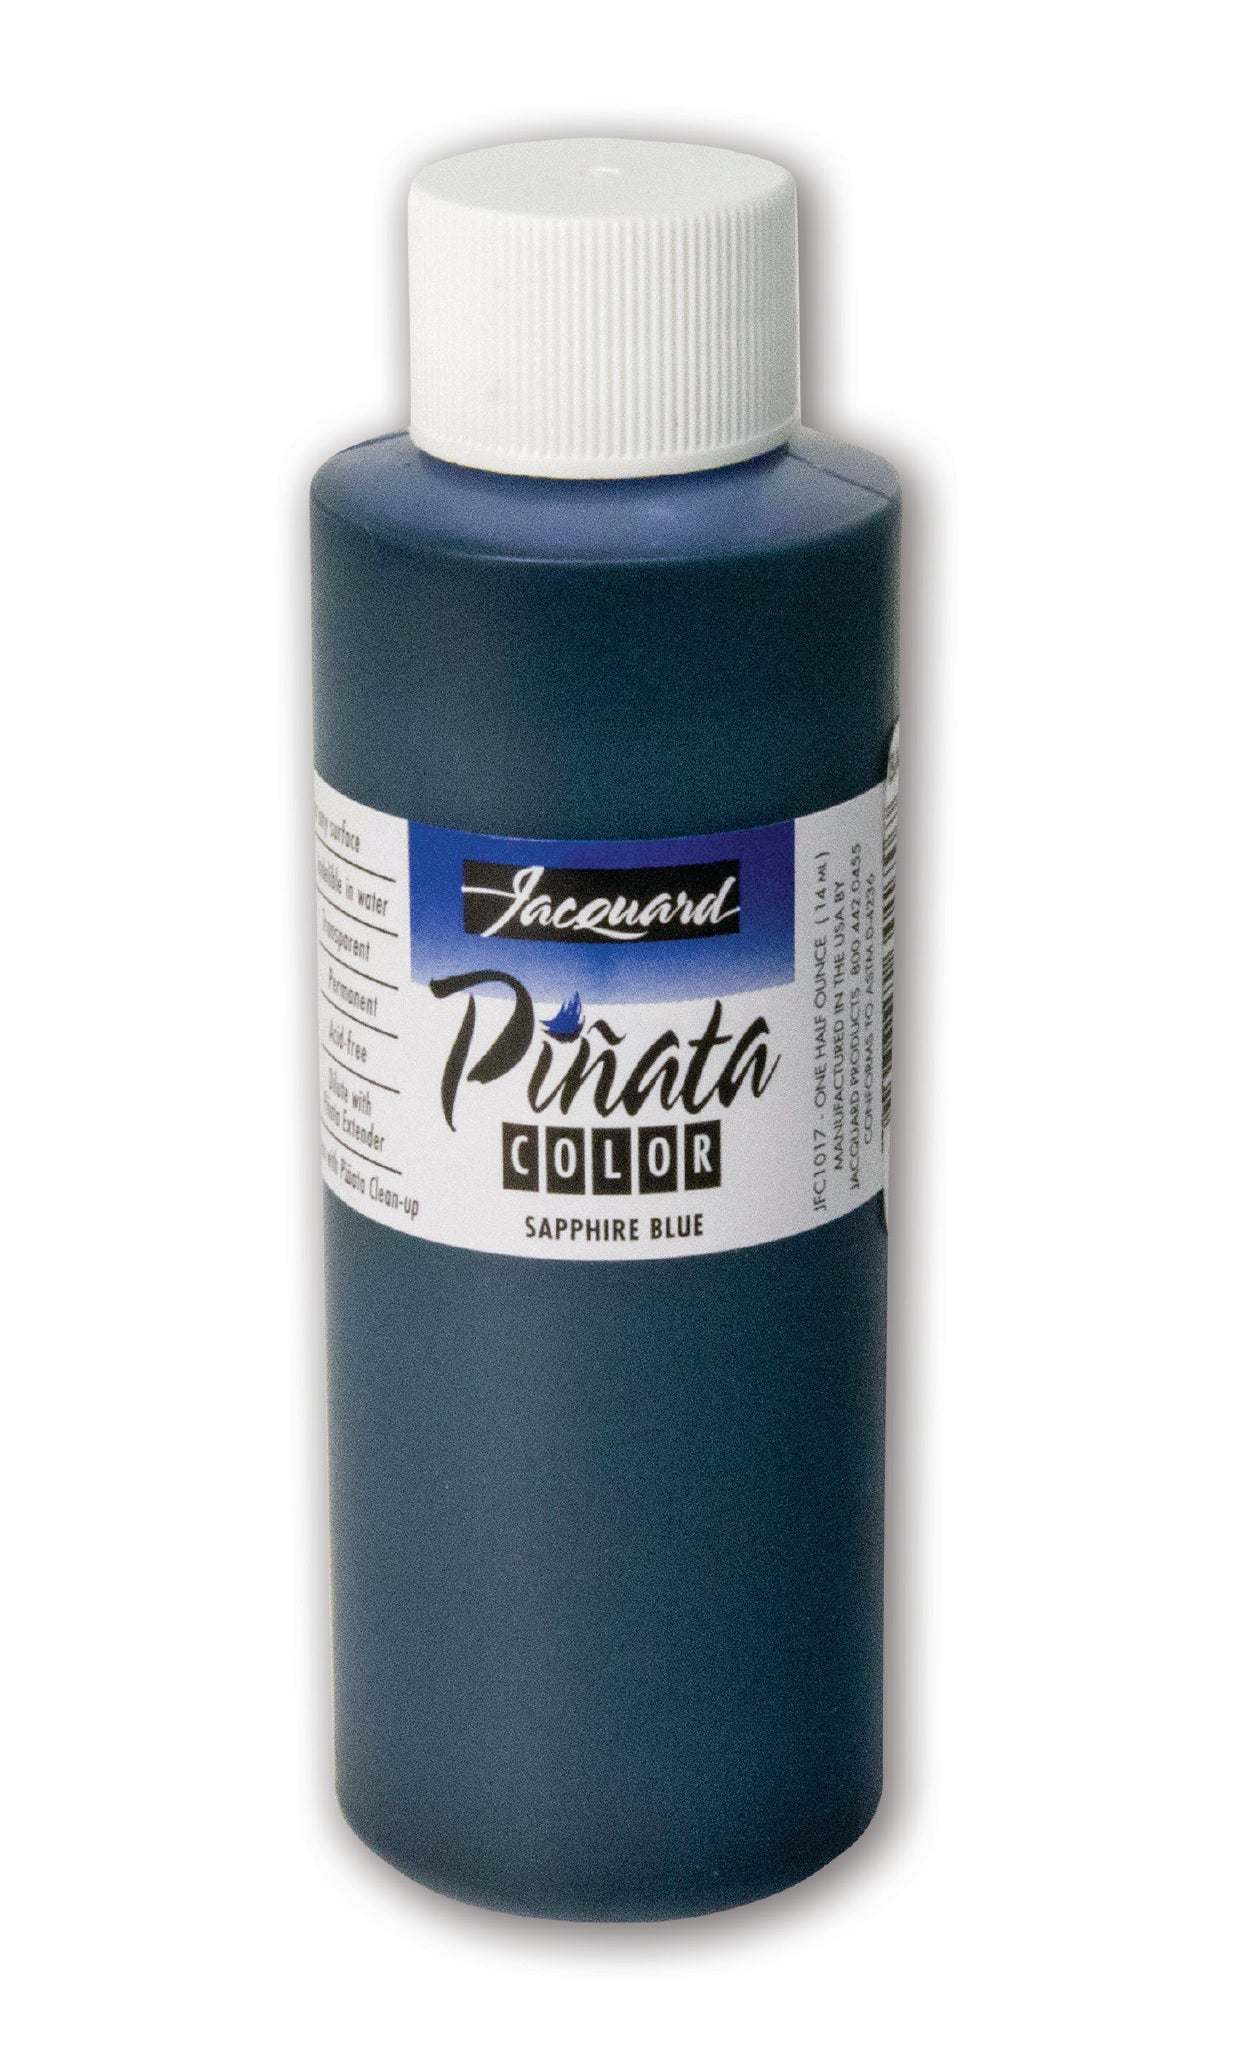 Jacquard Pinata Ink 120ml Sapphire Blue - theartshop.com.au